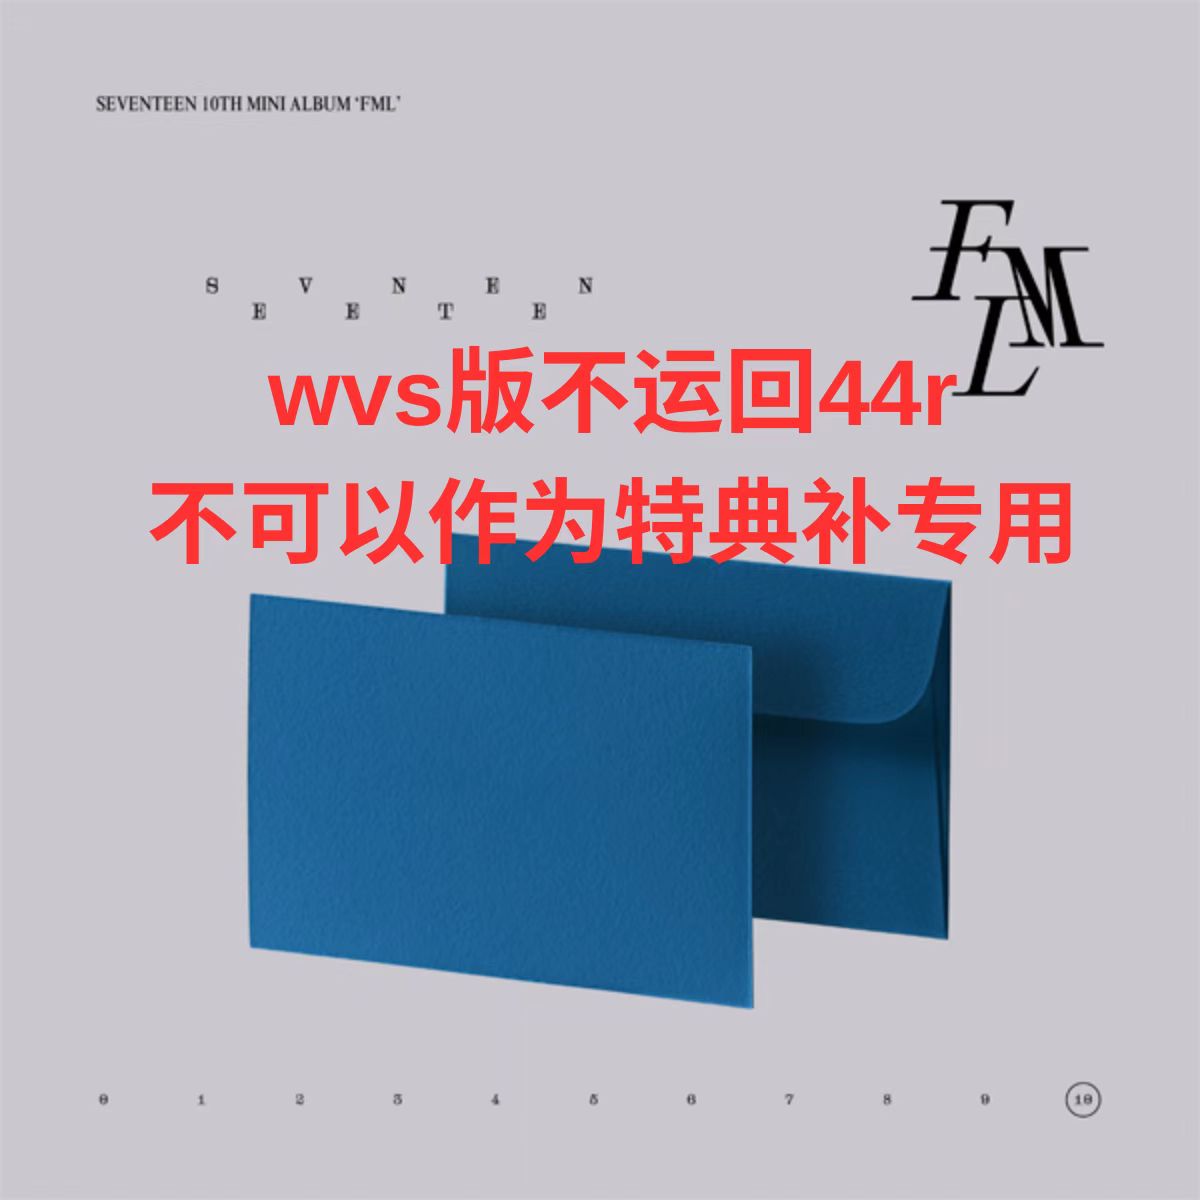 [拆卡专] [Ktown4u Special Gift] SEVENTEEN - 10th Mini Album [FML] (Weverse Albums ver.)_徐明浩_The8Day记事馆